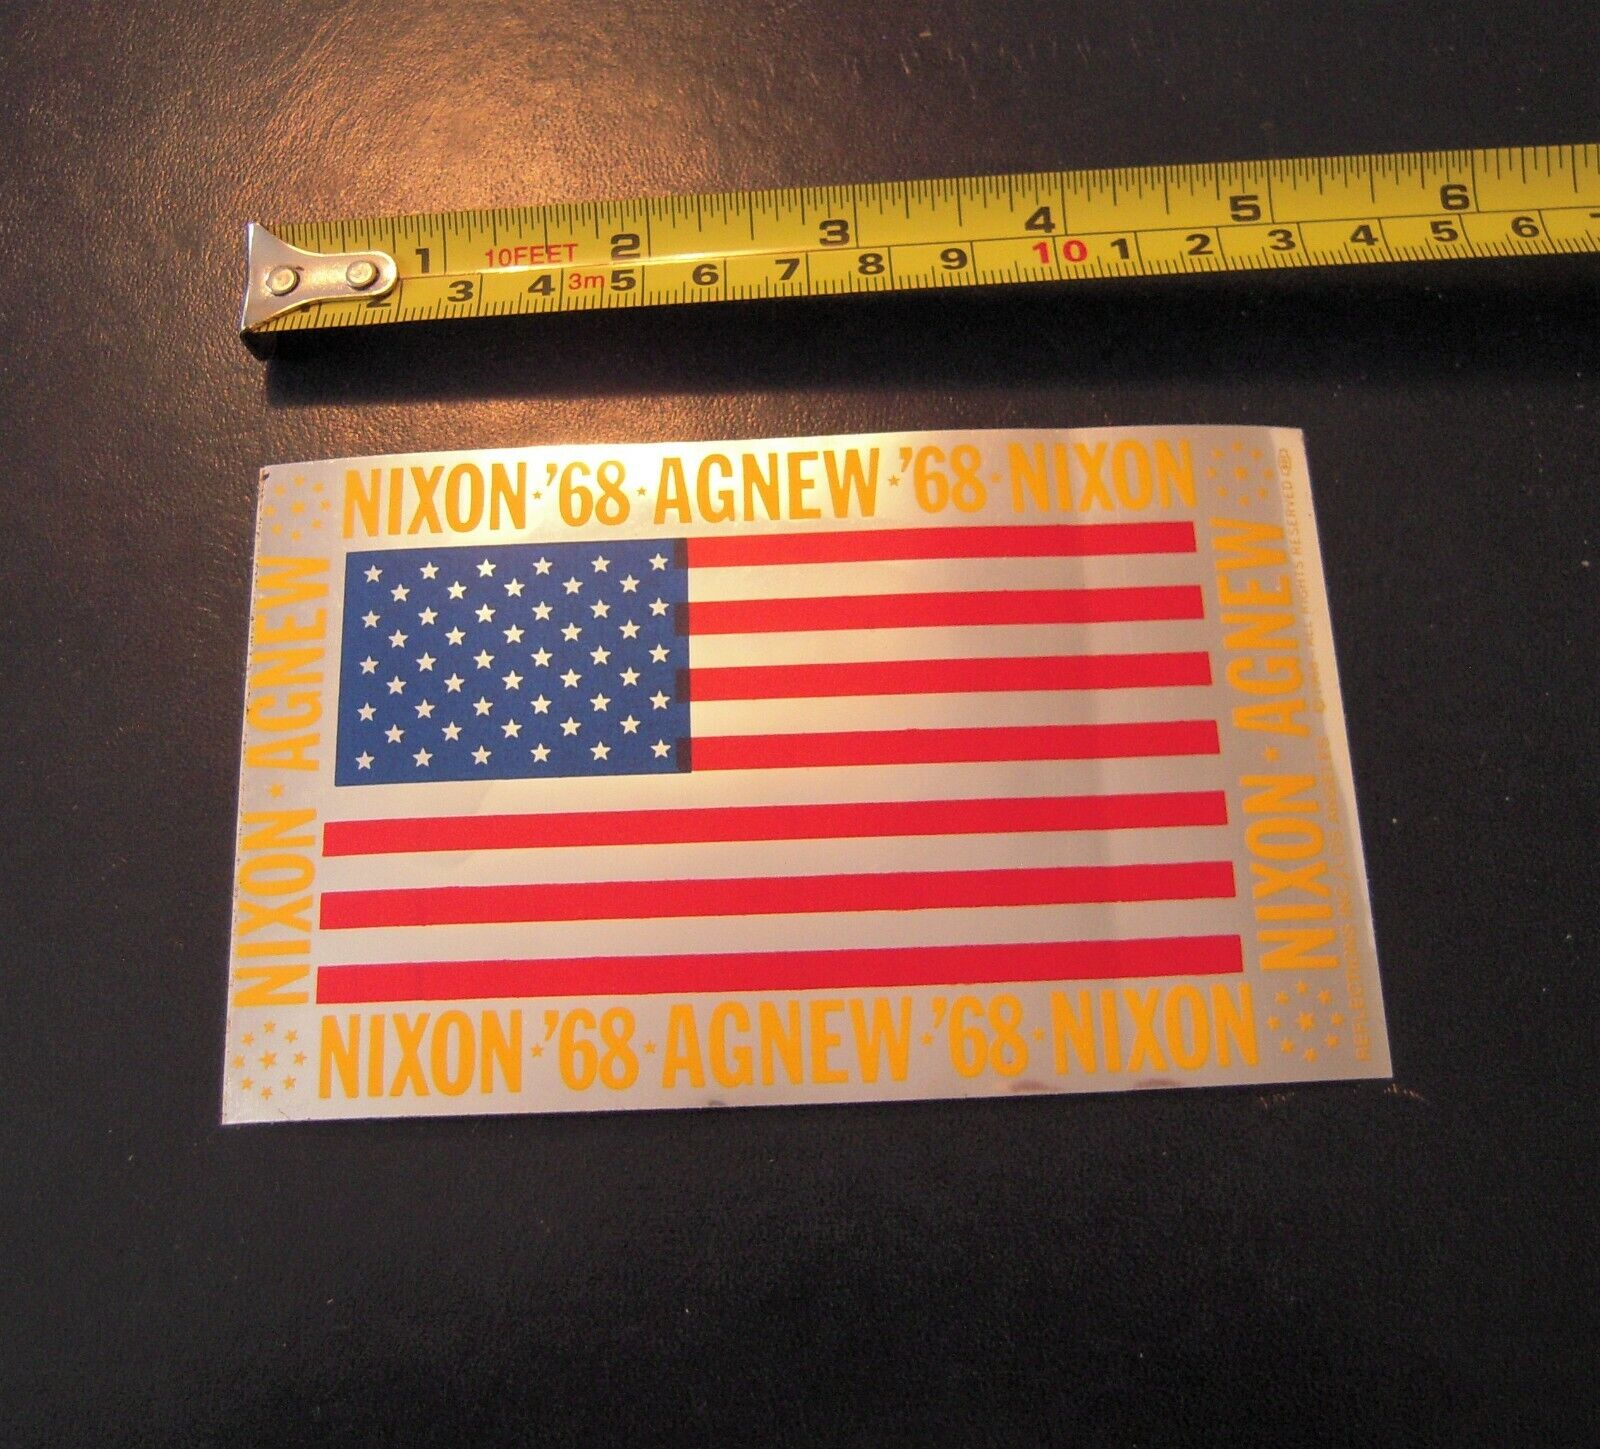 NIXON-AGNEW '68 Republican National Convention 1968 Bumper Sticker NEW